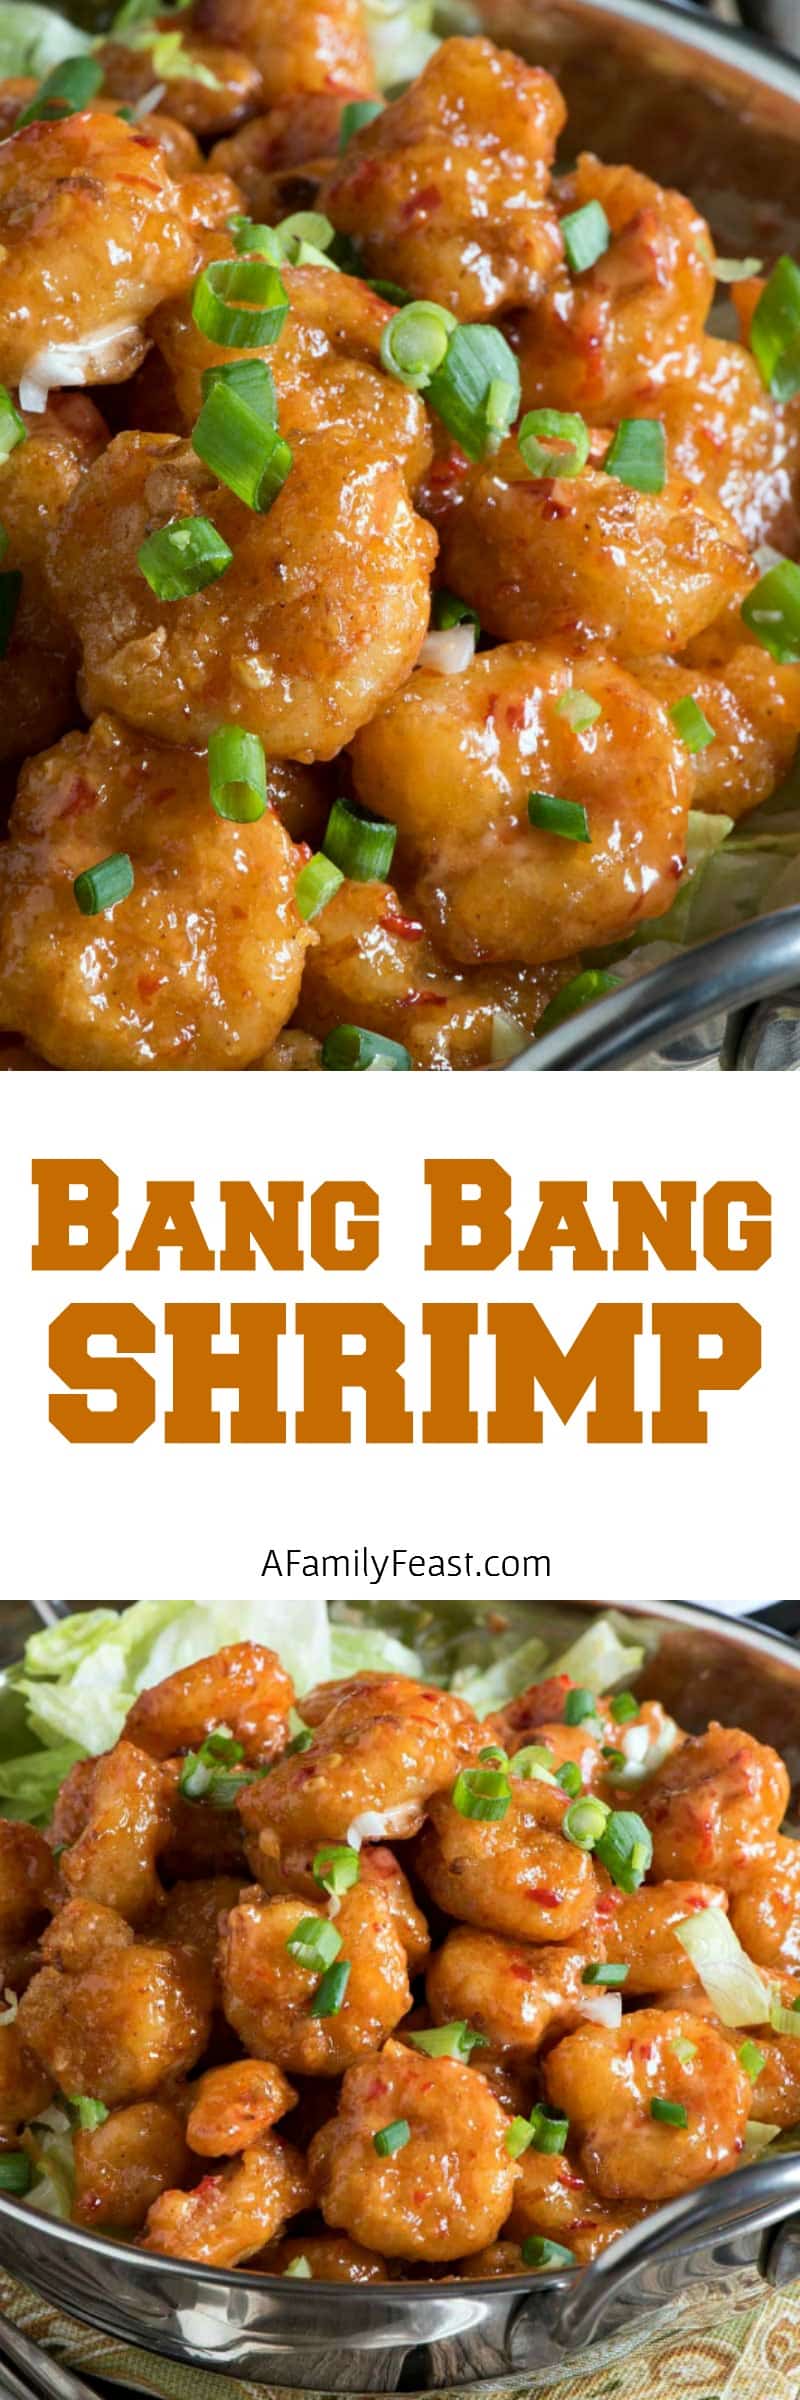 Bang Bang Shrimp - A copycat version of the super popular appetizer originally served at the Bone Fish Grill chain of restaurants.